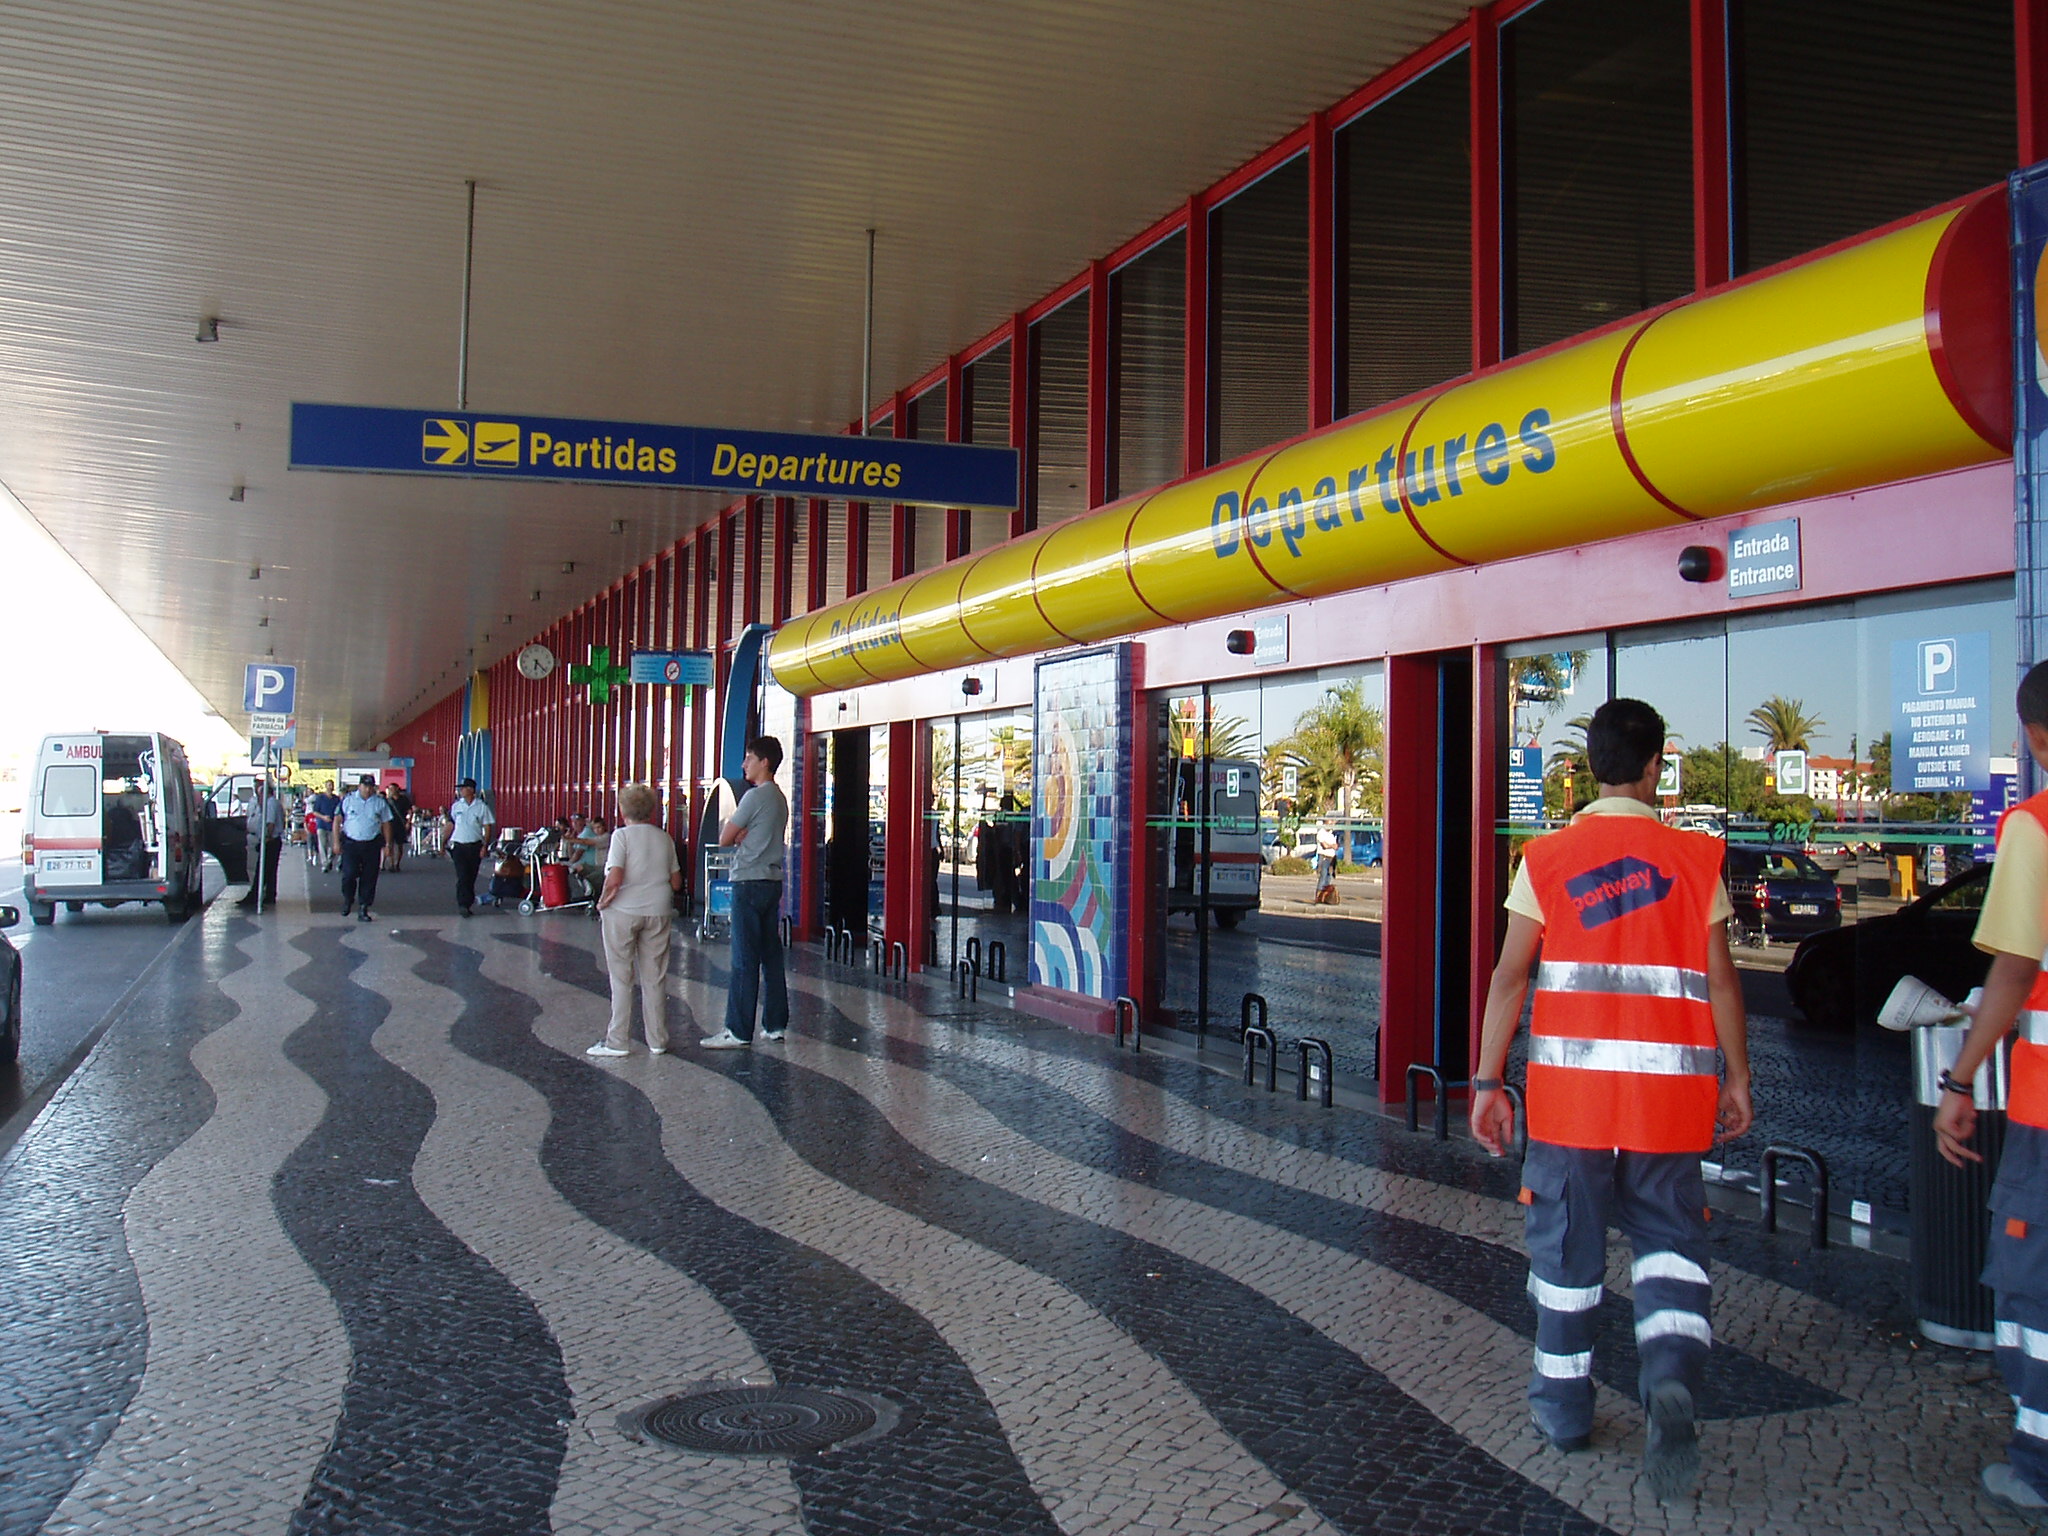 Faro airport departures